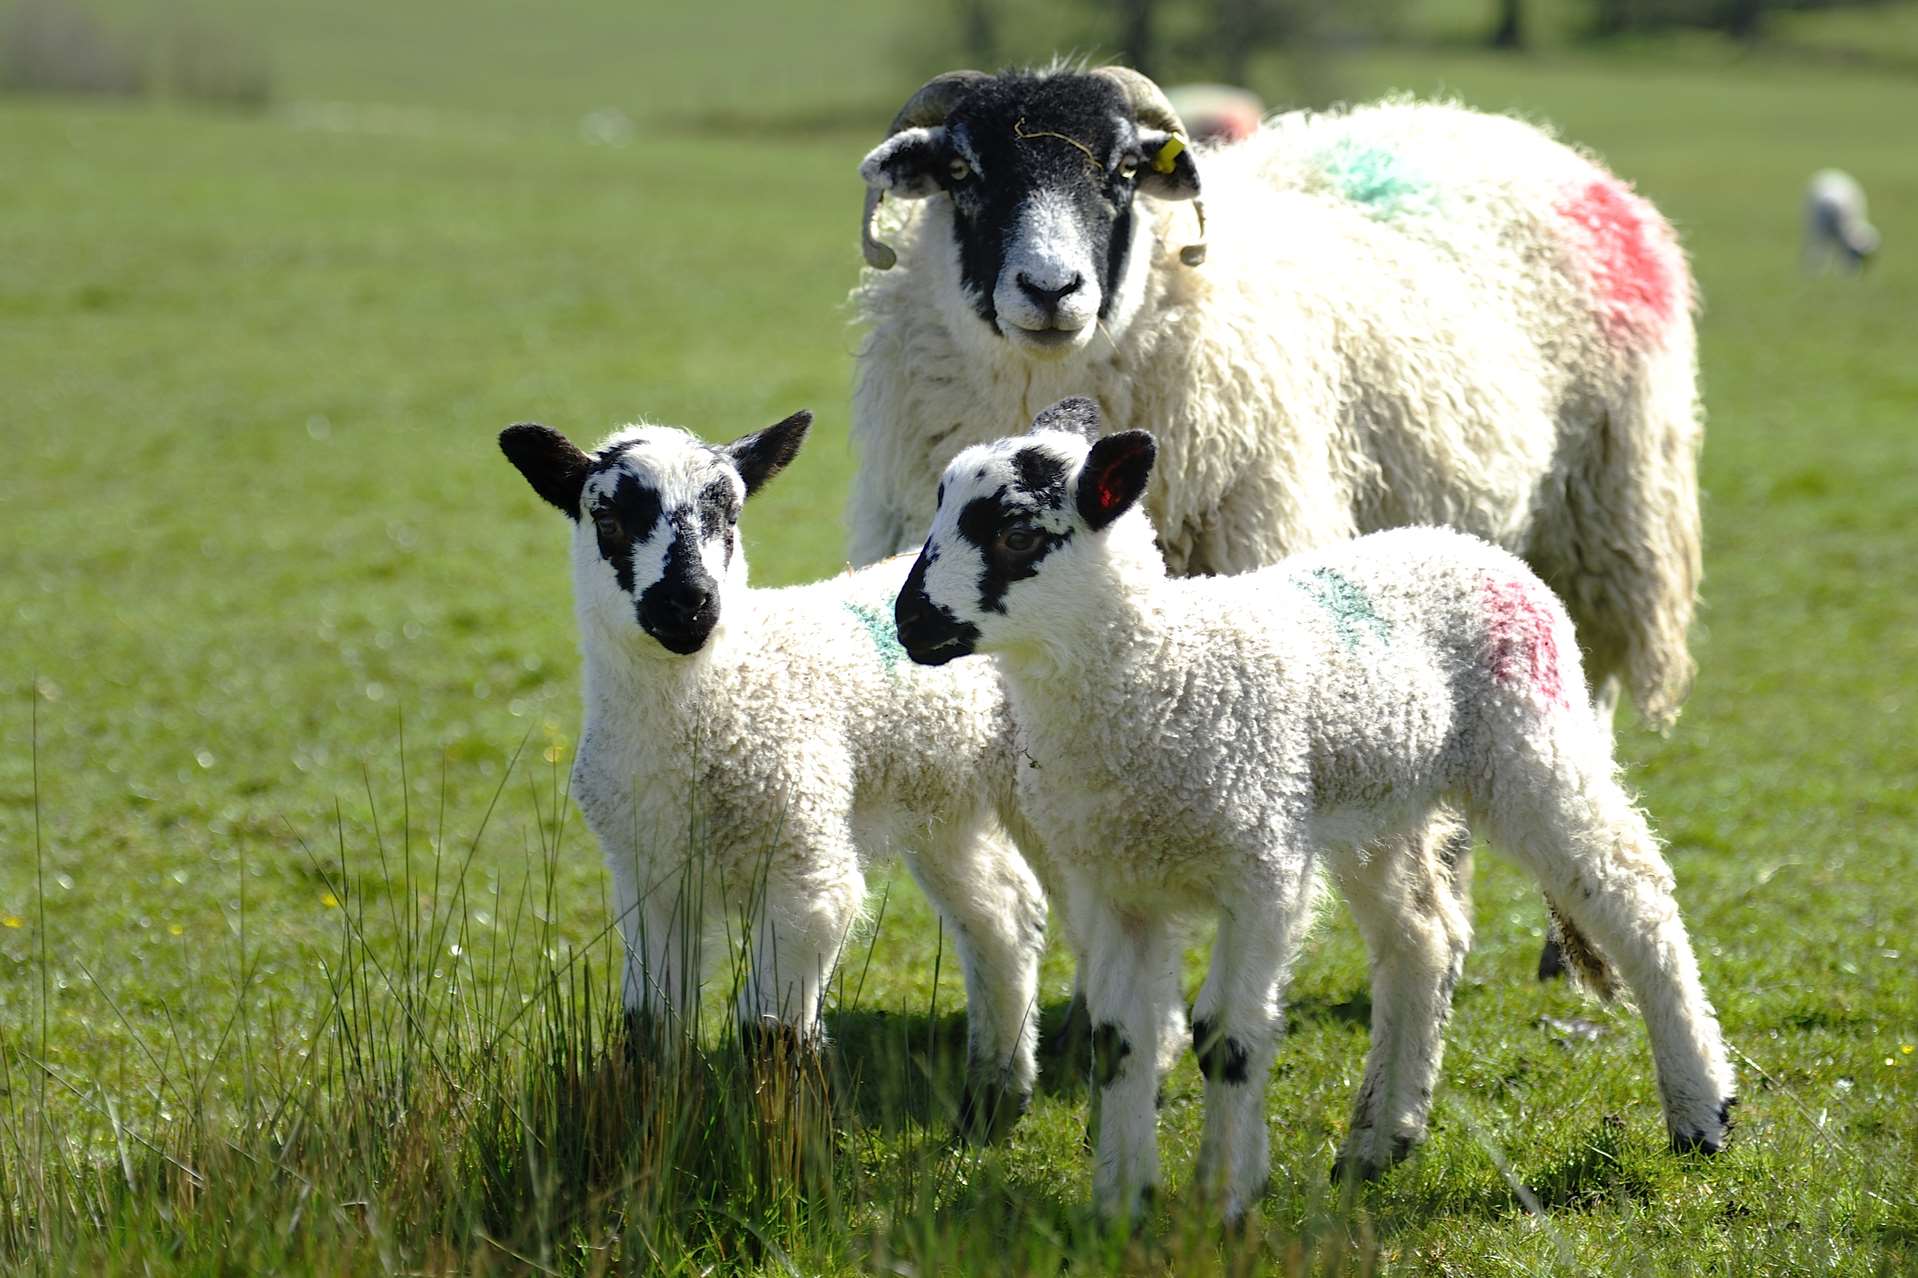 Ewes will keep a close eye on their newborn lambs